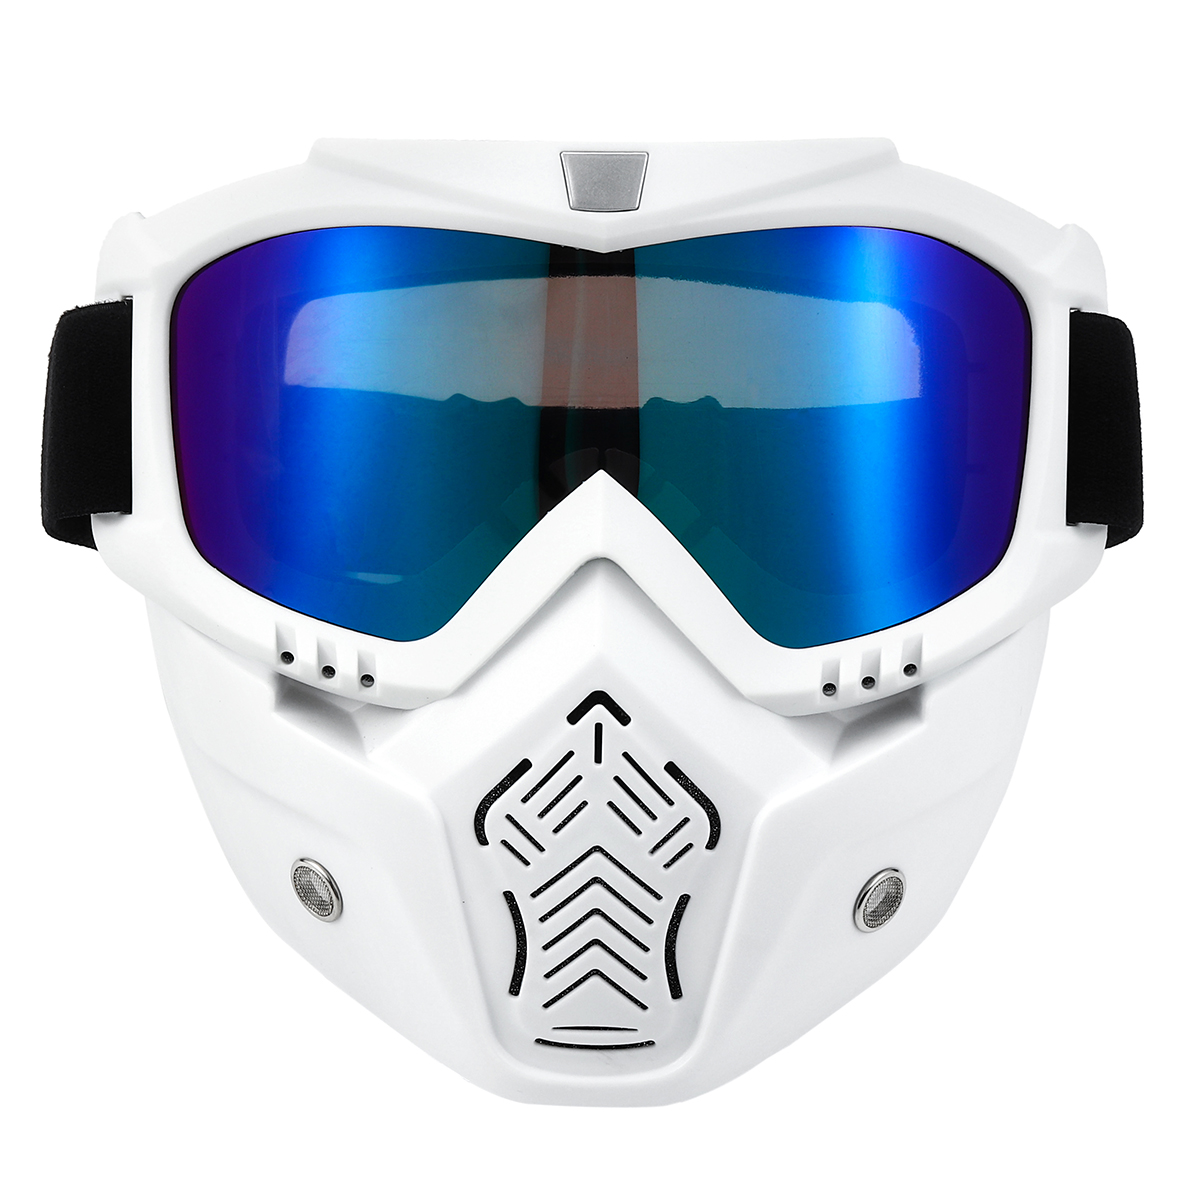 

Helmet Face Mask Goggles Eyewear Glasses Windshield For Motorcycle Bike MTB Dirt Bike Riding